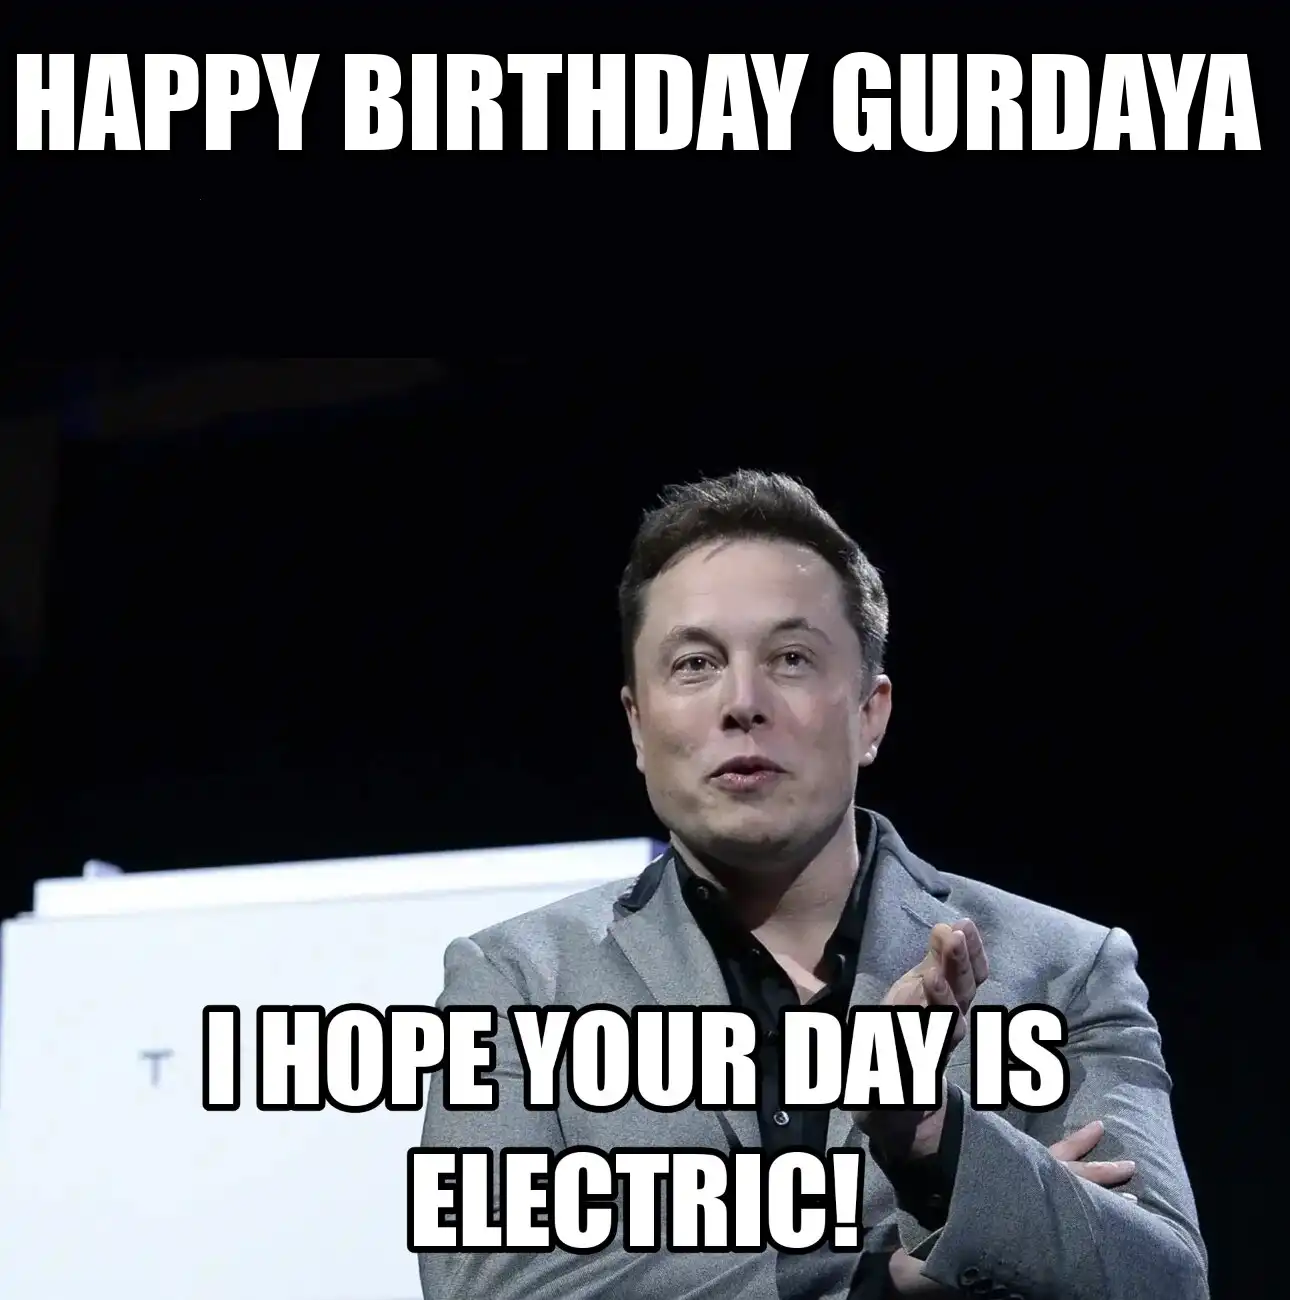 Happy Birthday Gurdaya I Hope Your Day Is Electric Meme